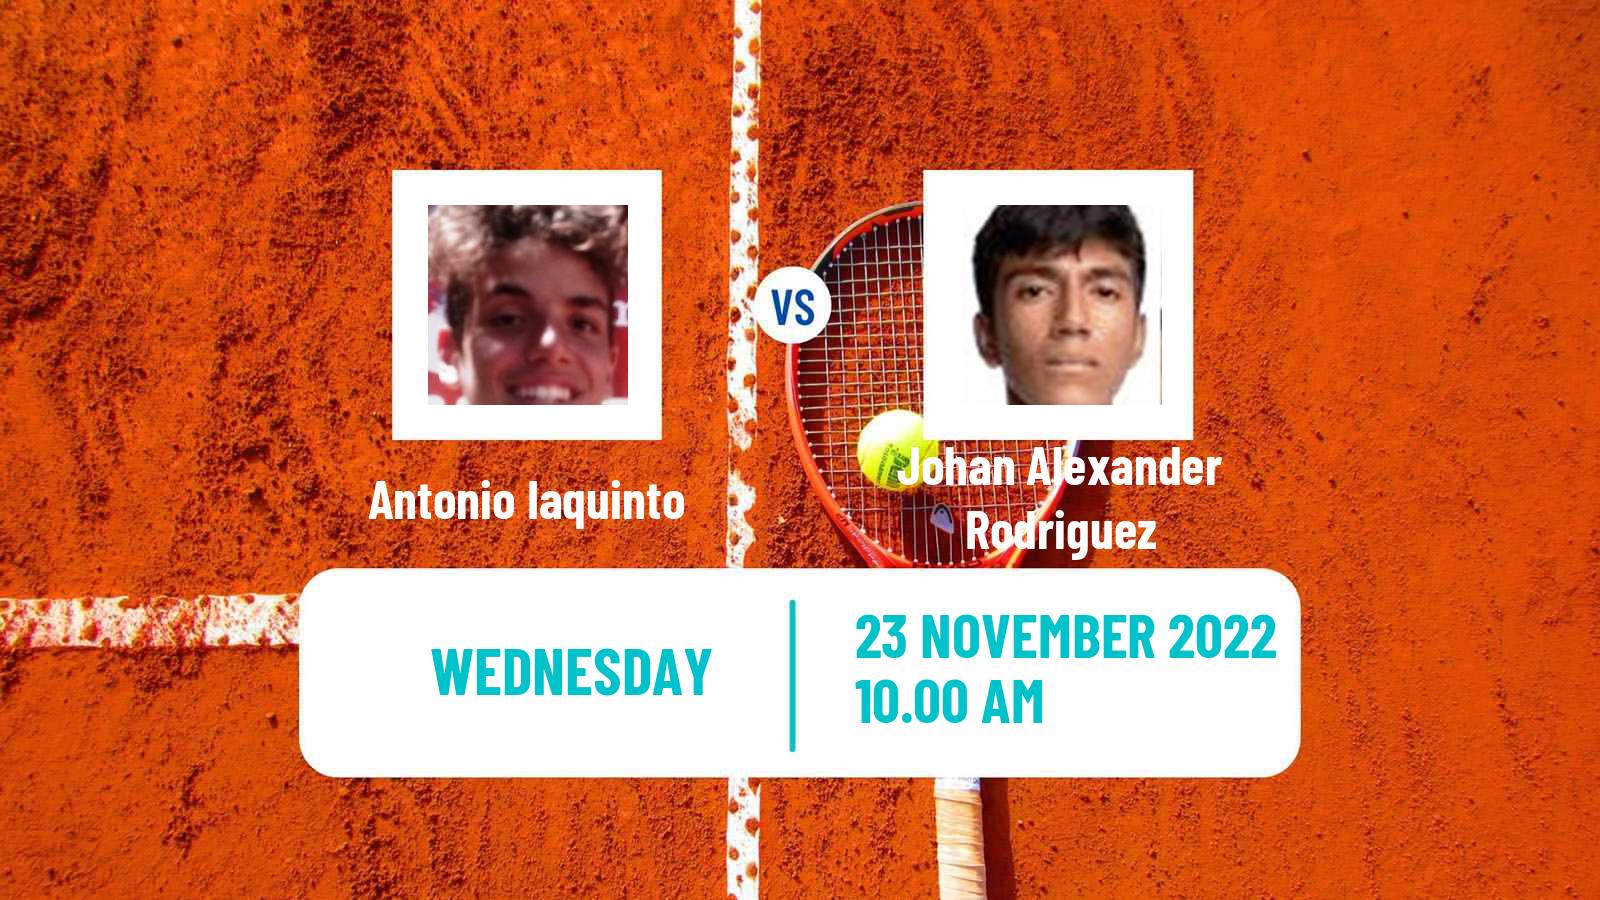 Tennis ITF Tournaments Antonio Iaquinto - Johan Alexander Rodriguez